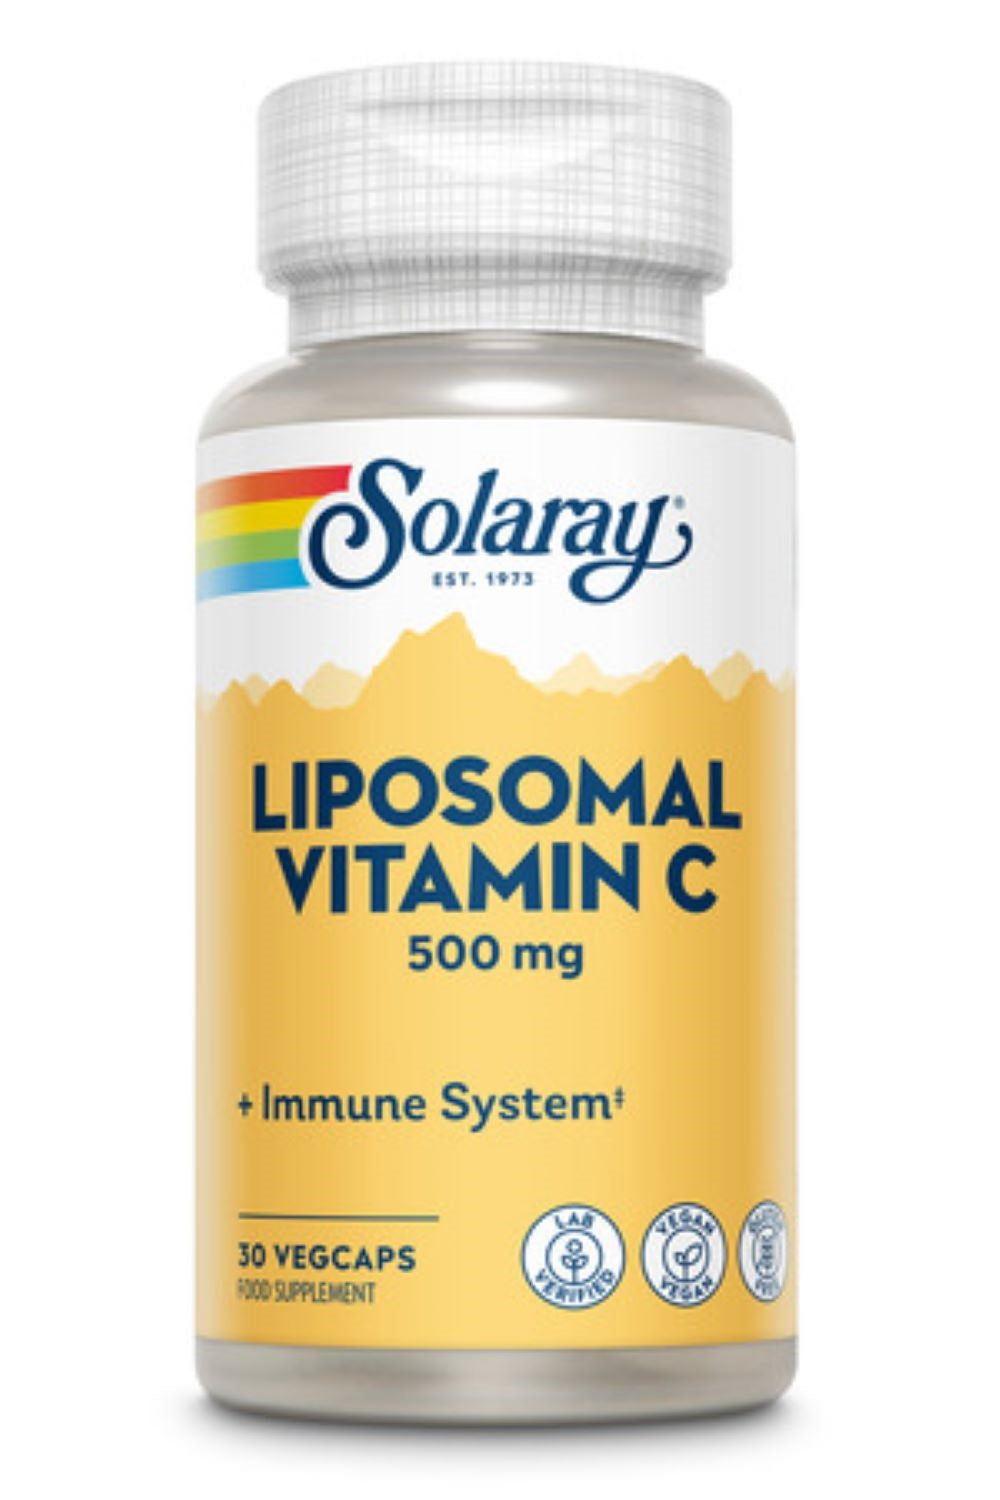 Solaray vitamina c lipossomal - 500 mg, 30 cápsulas vegetais